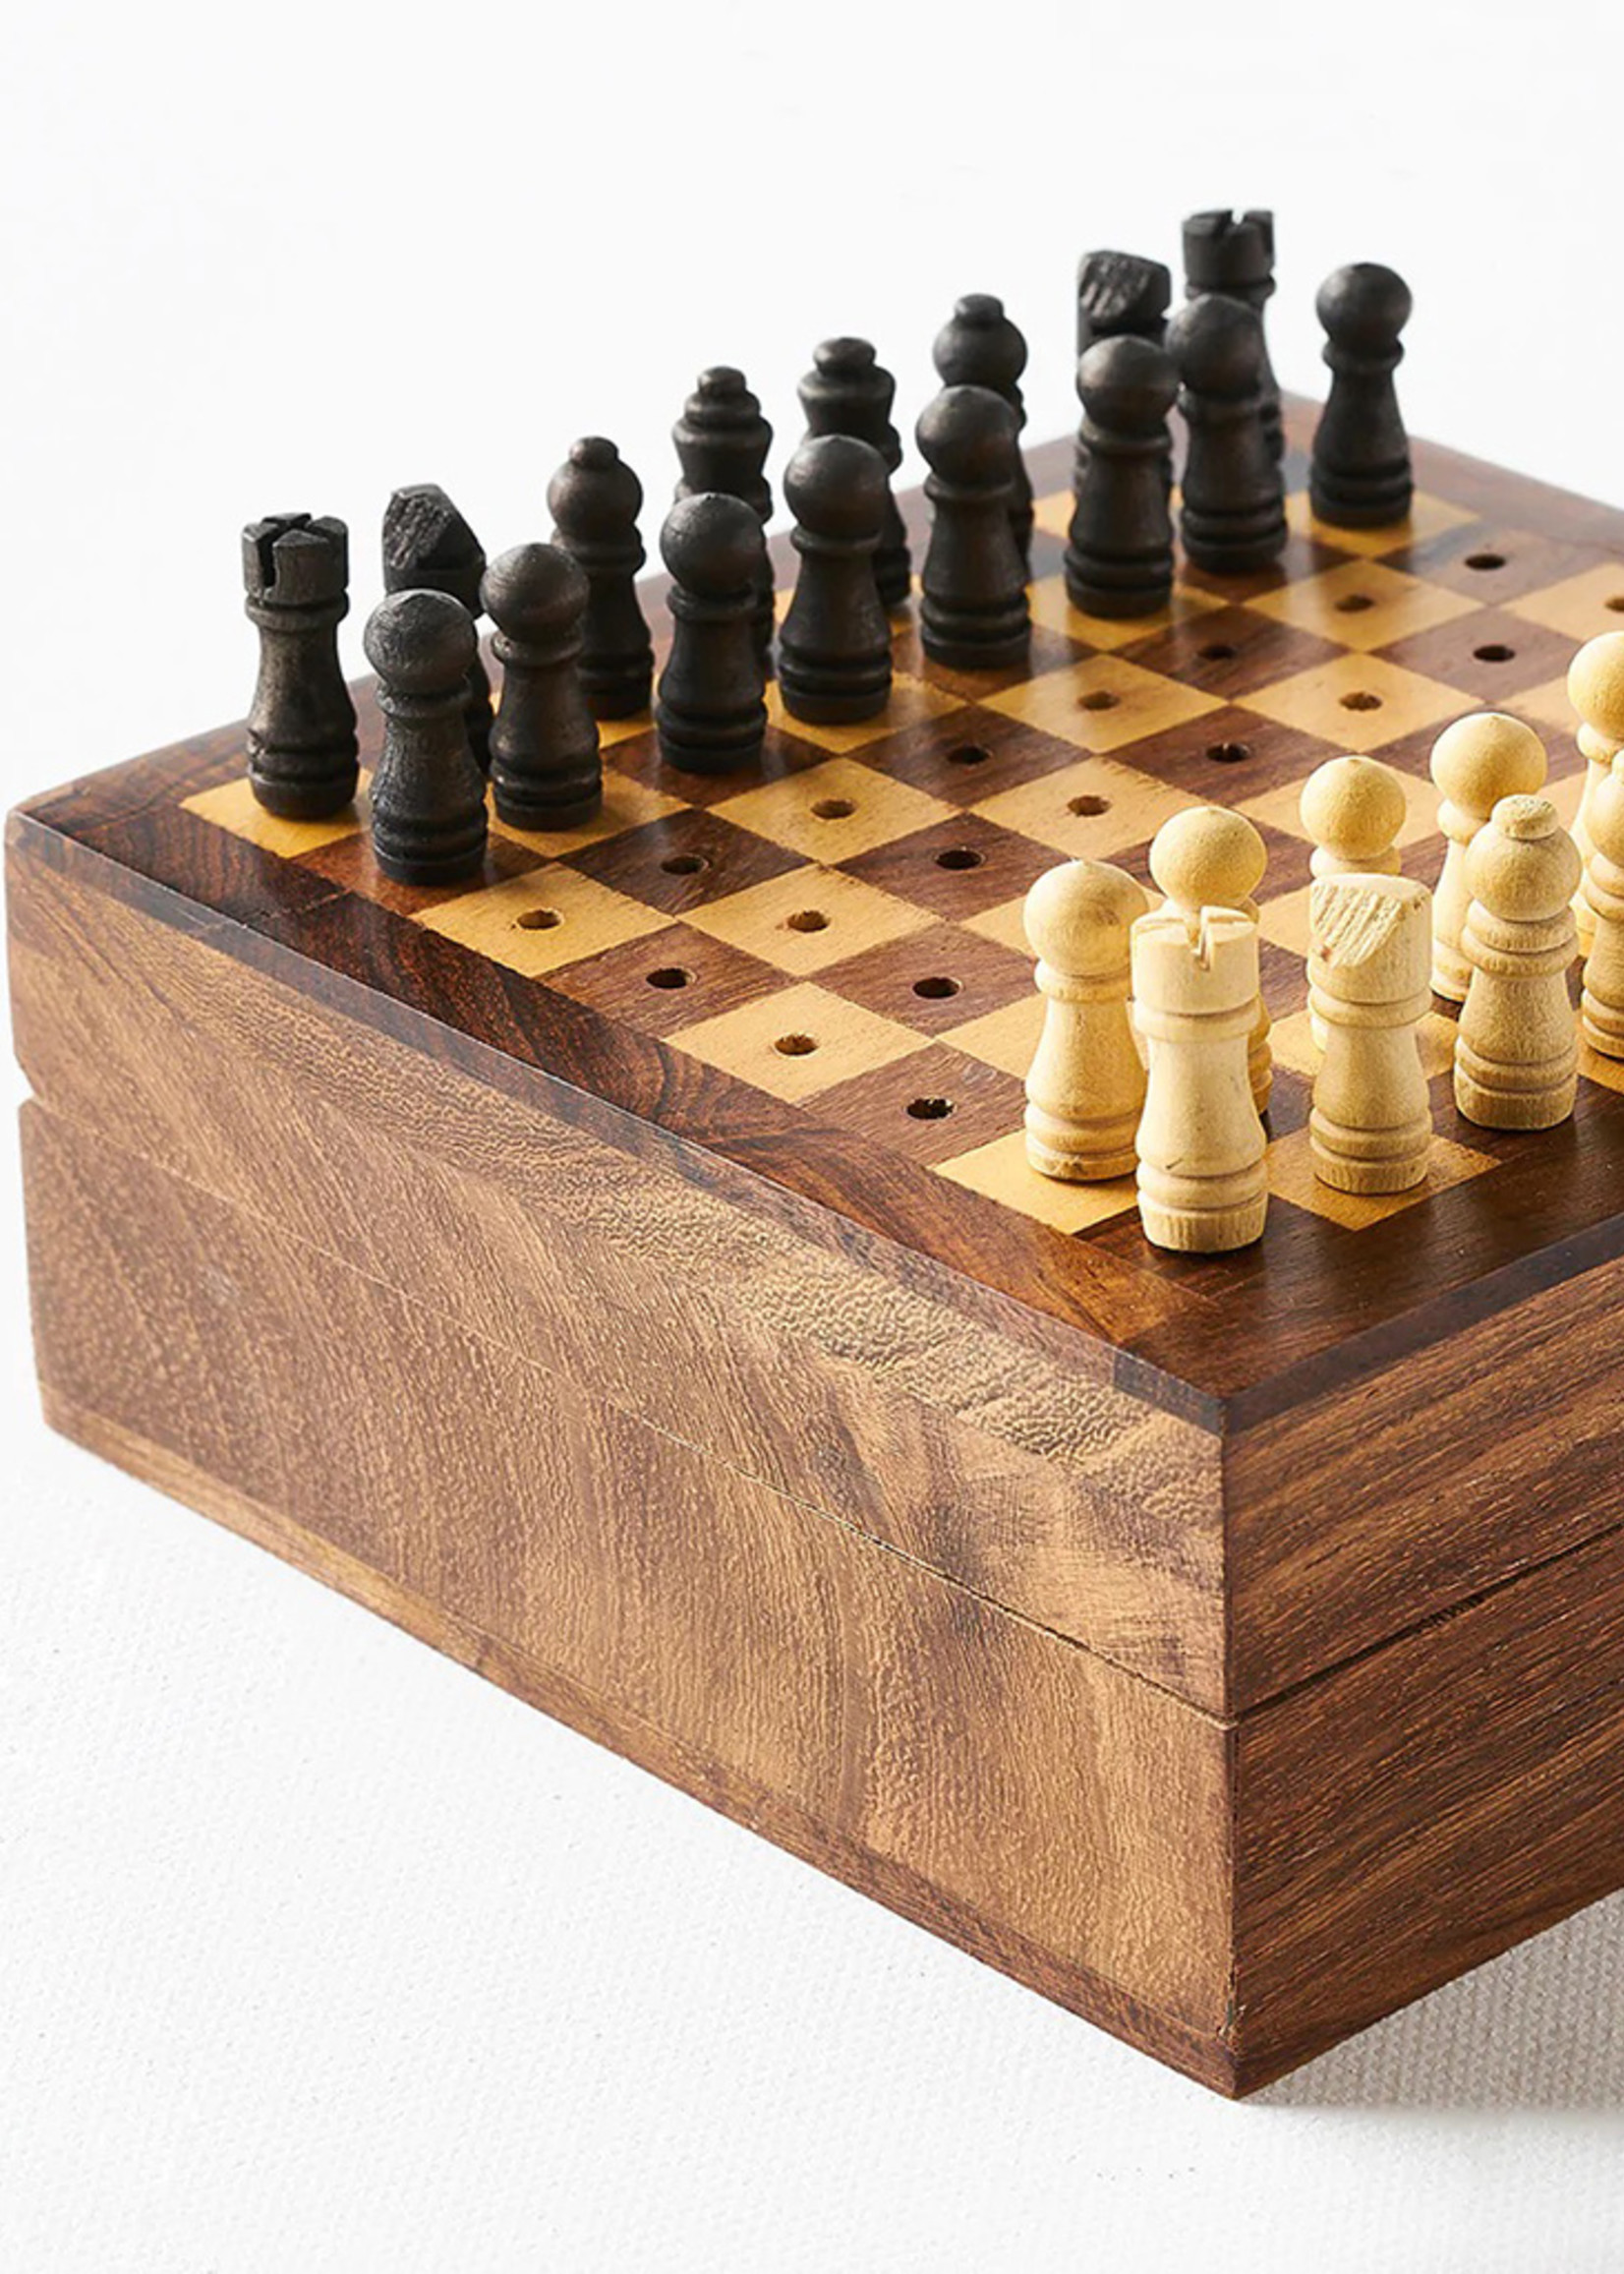 Matr Boomie Chess Travel Game Box Set